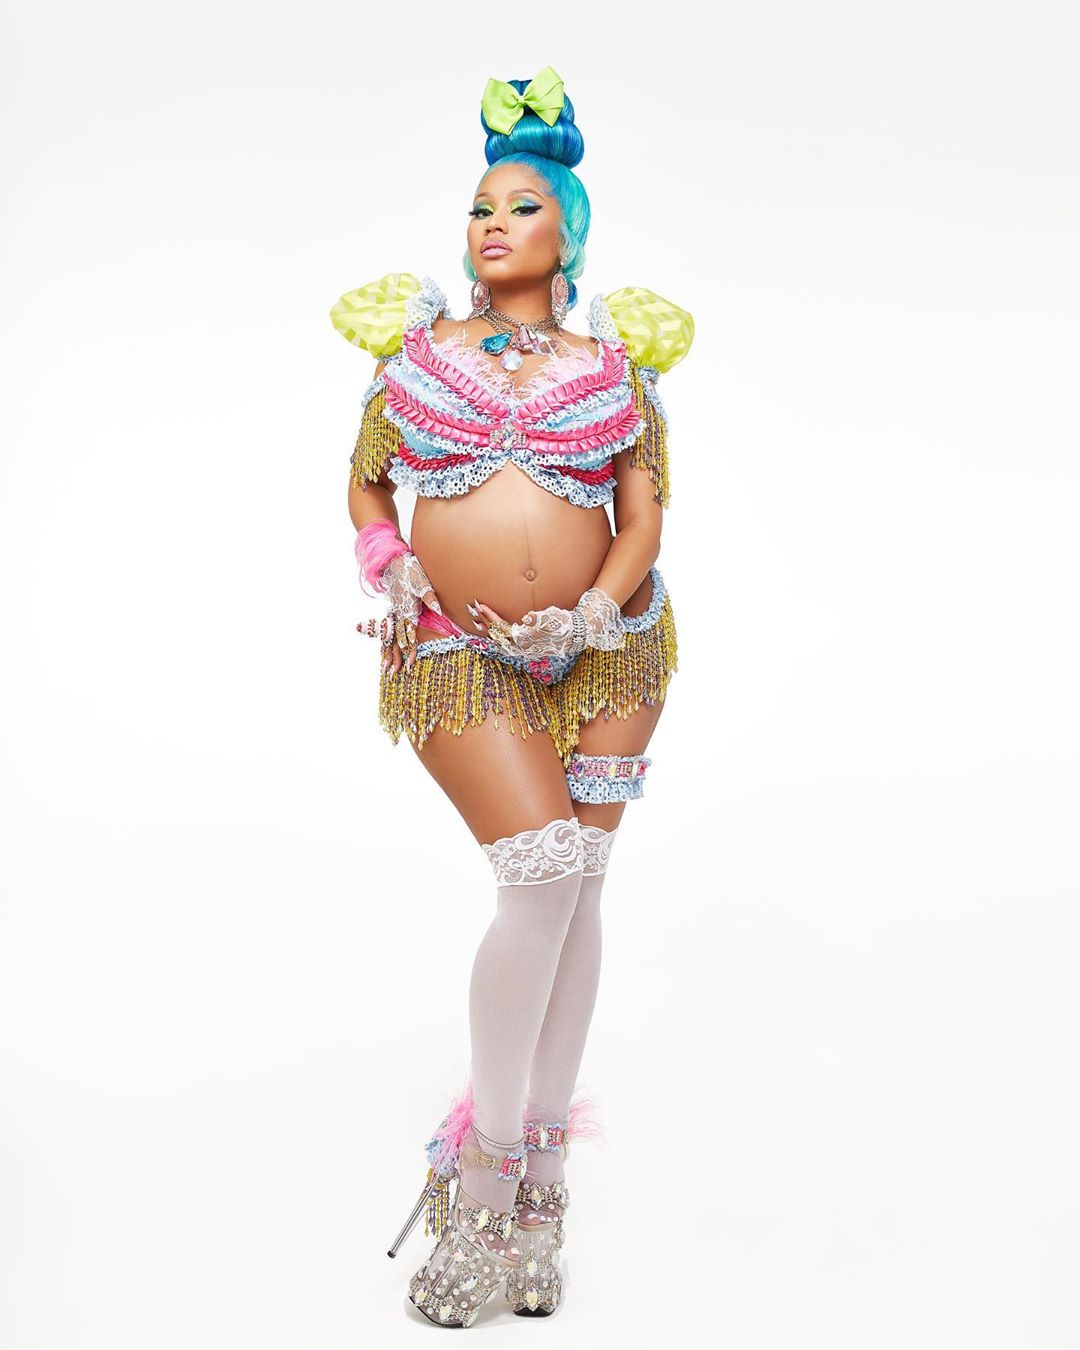 Nicki Minaj Introduced the World To Her Newborn Son | Essence